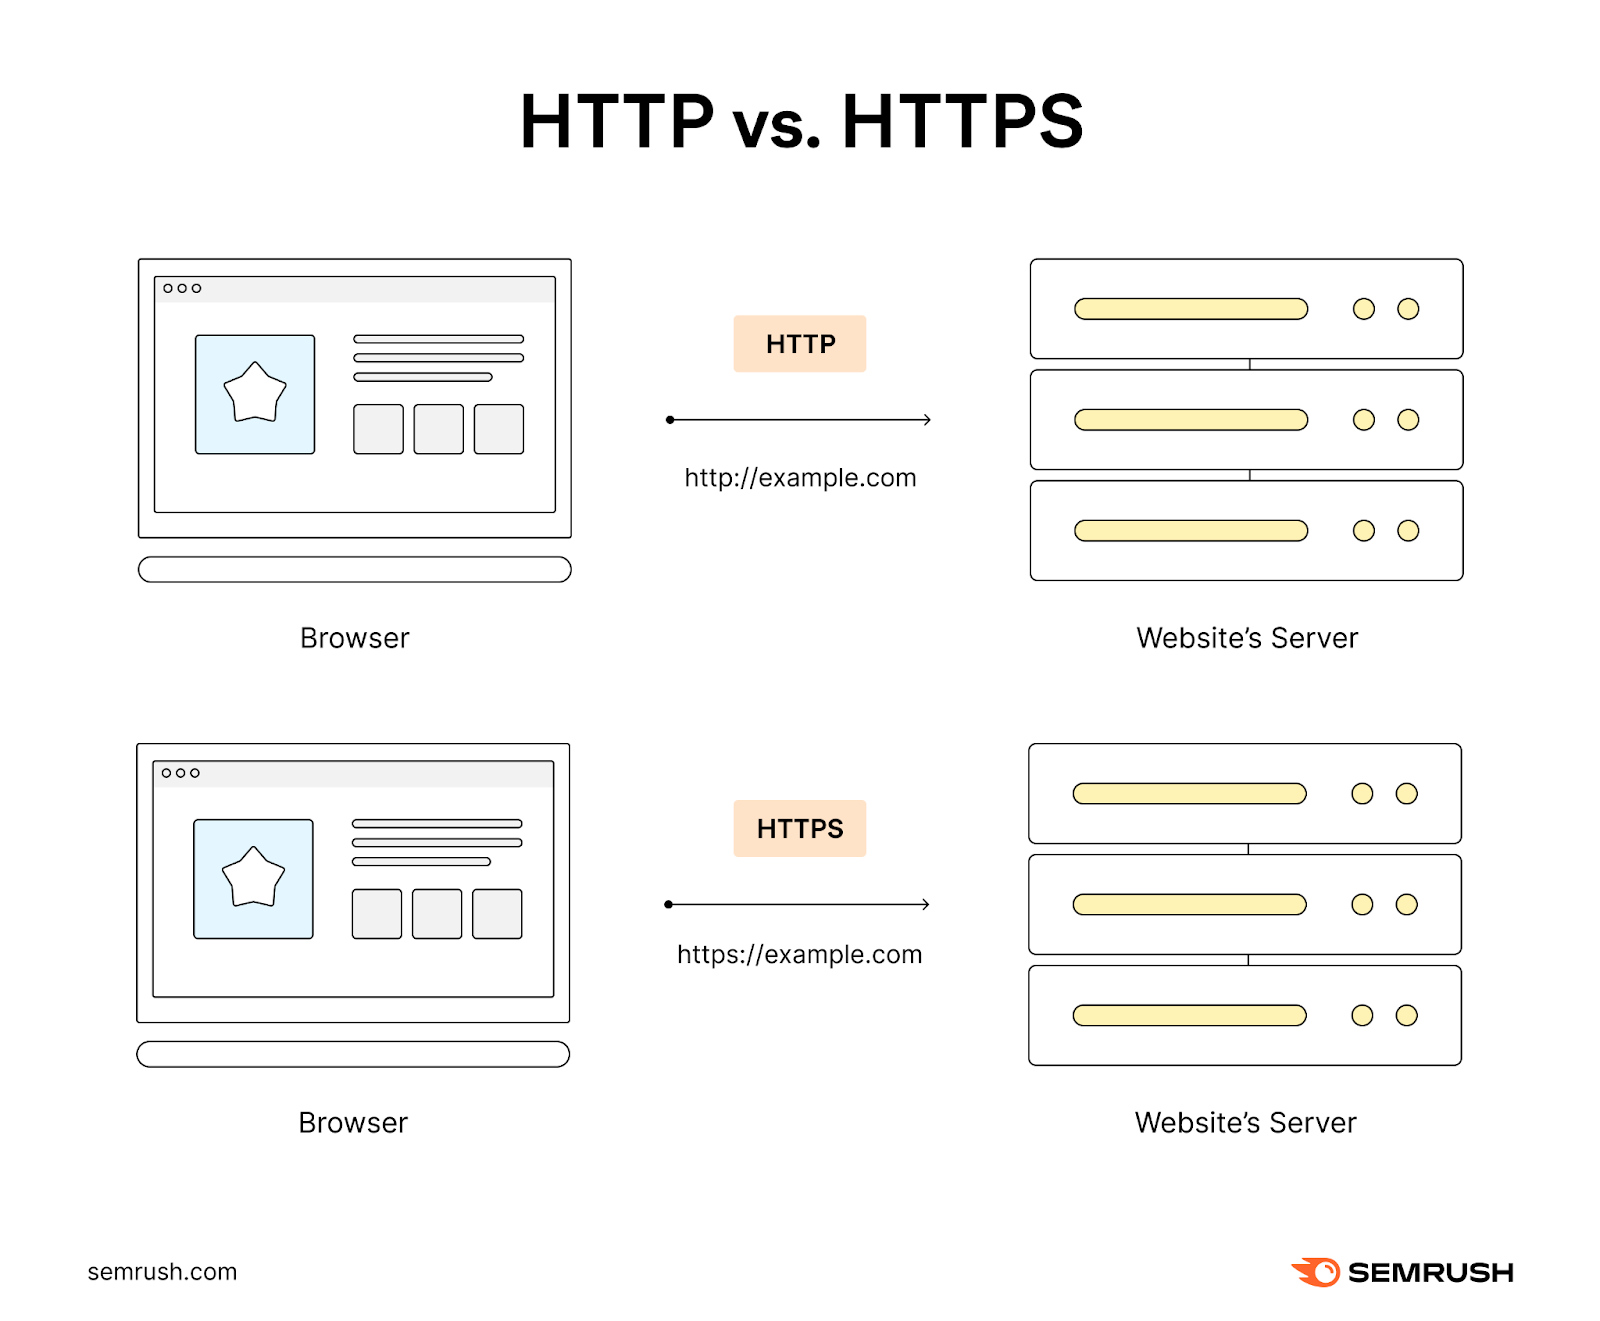 HTTP URLs start with “http://.”, while HTTPS URLs begin with “https://.”